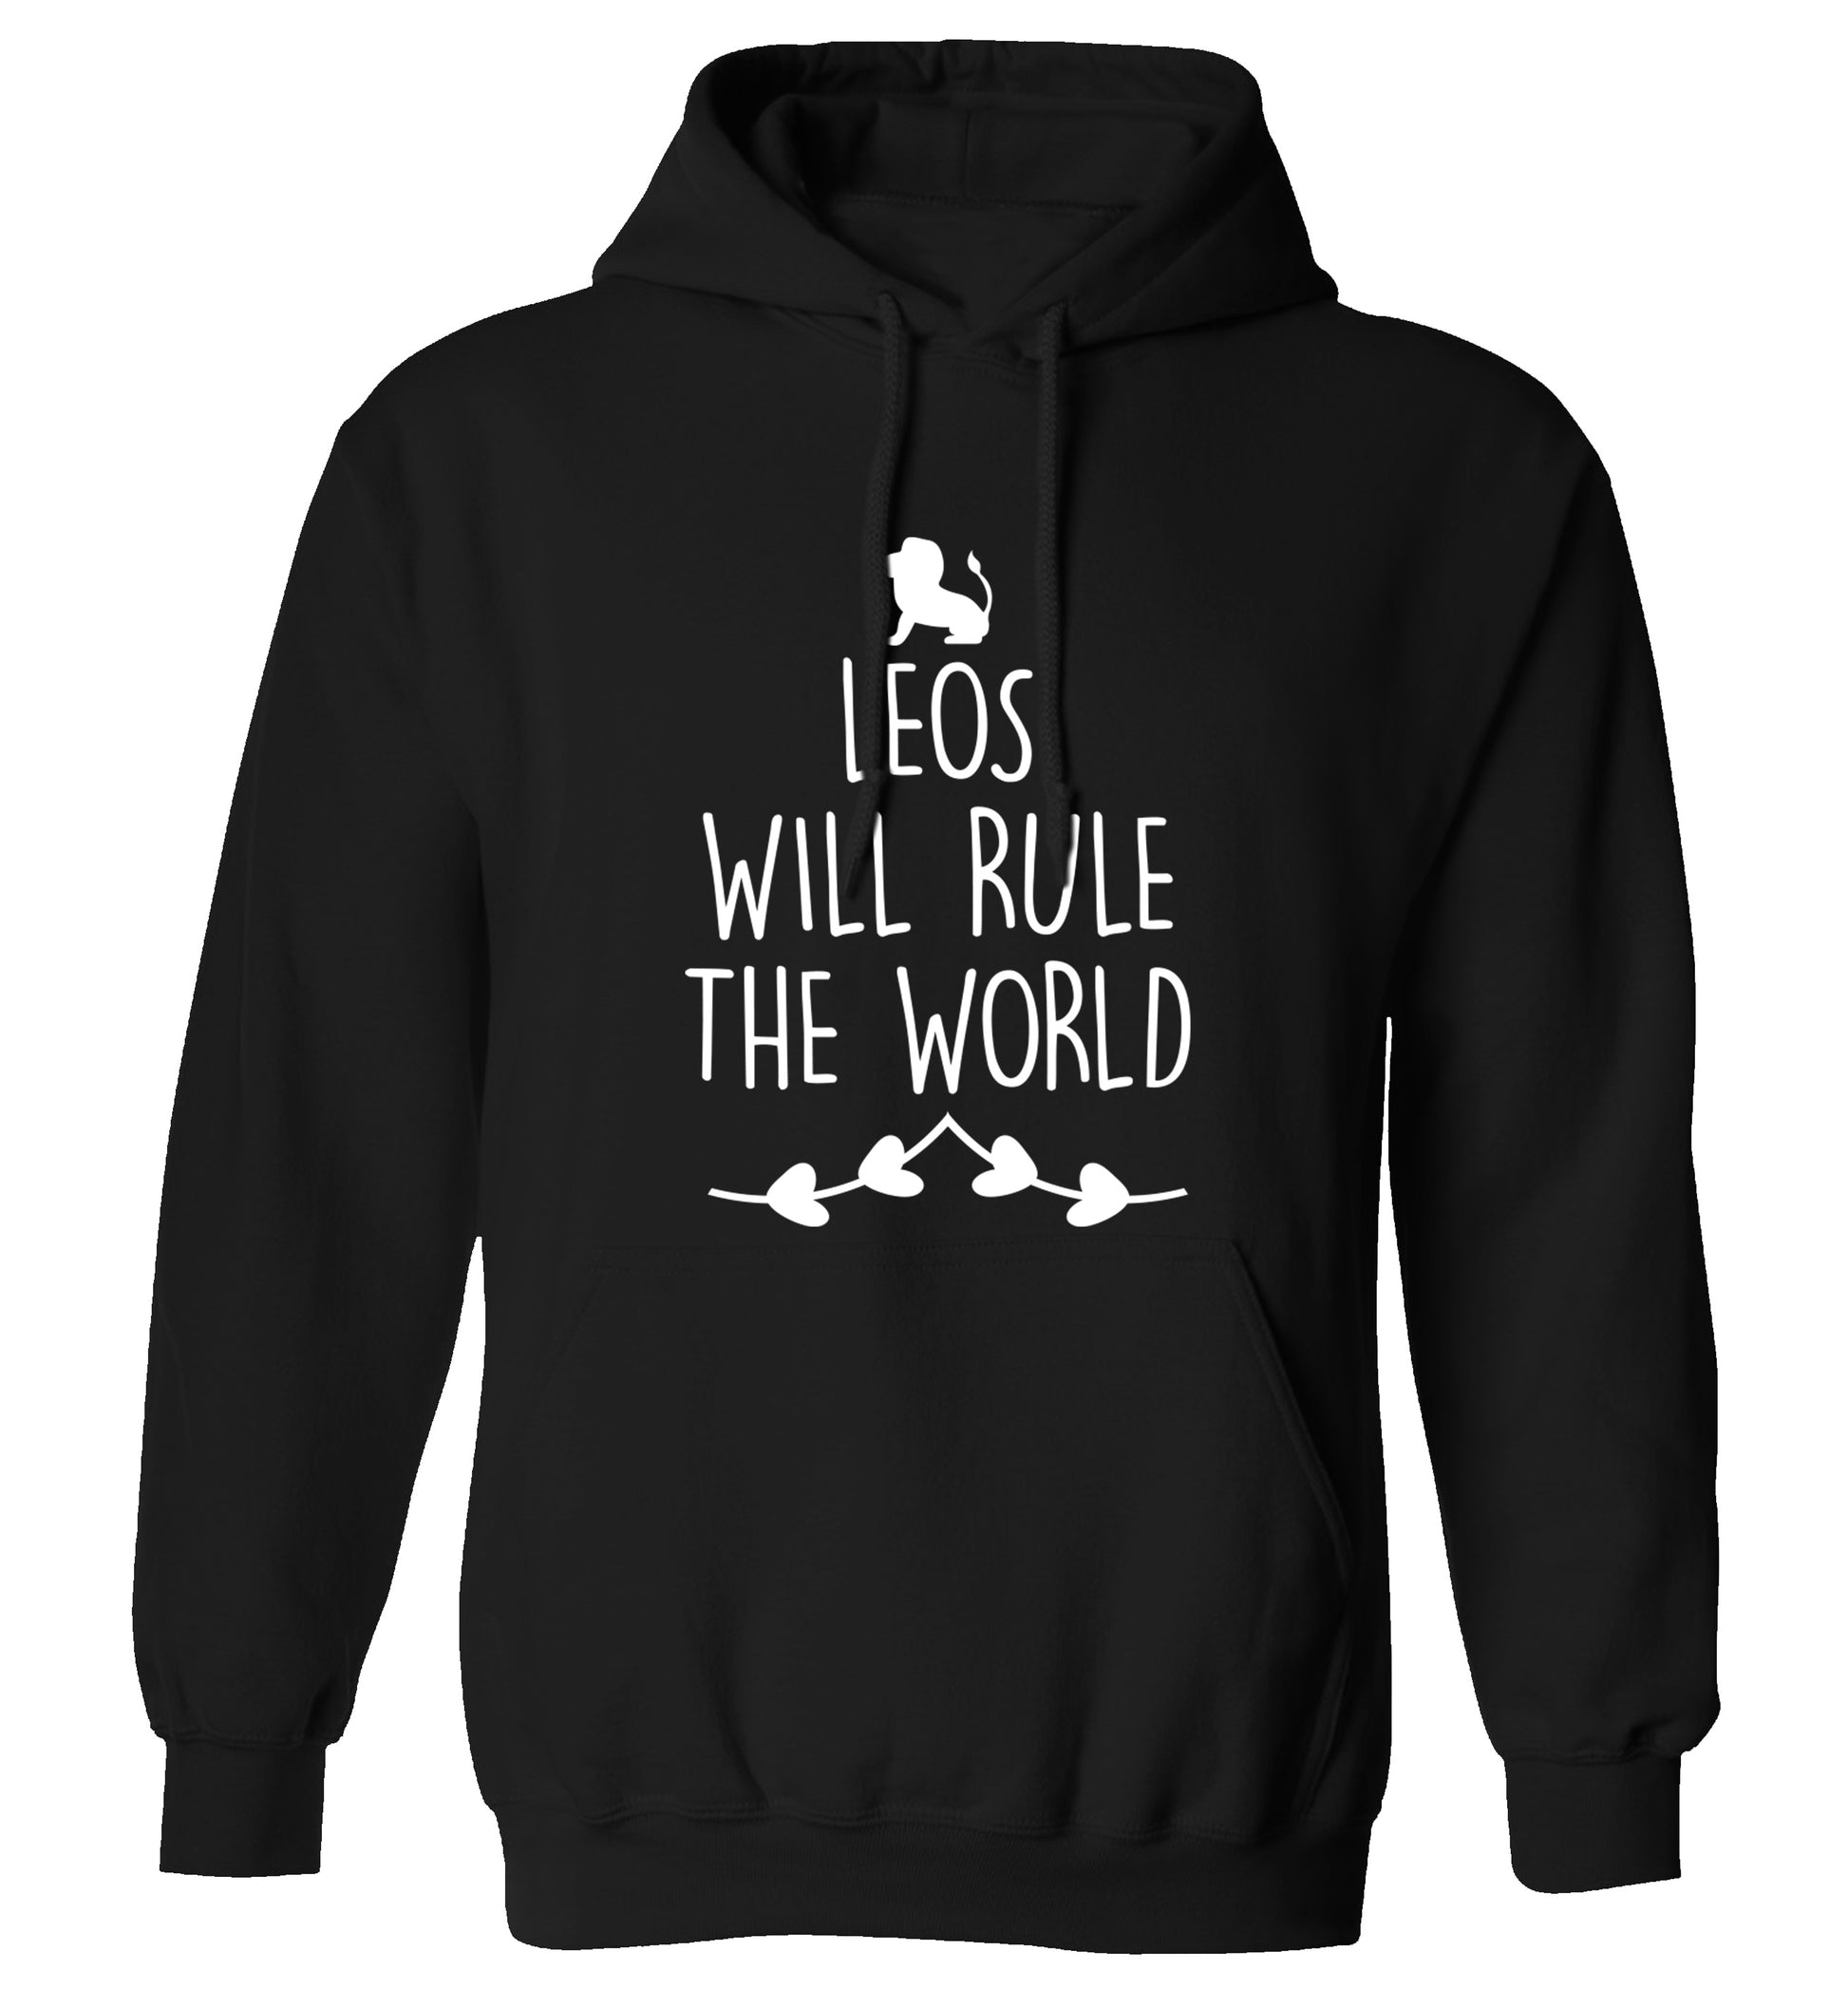 Leos will run the world adults unisex black hoodie 2XL